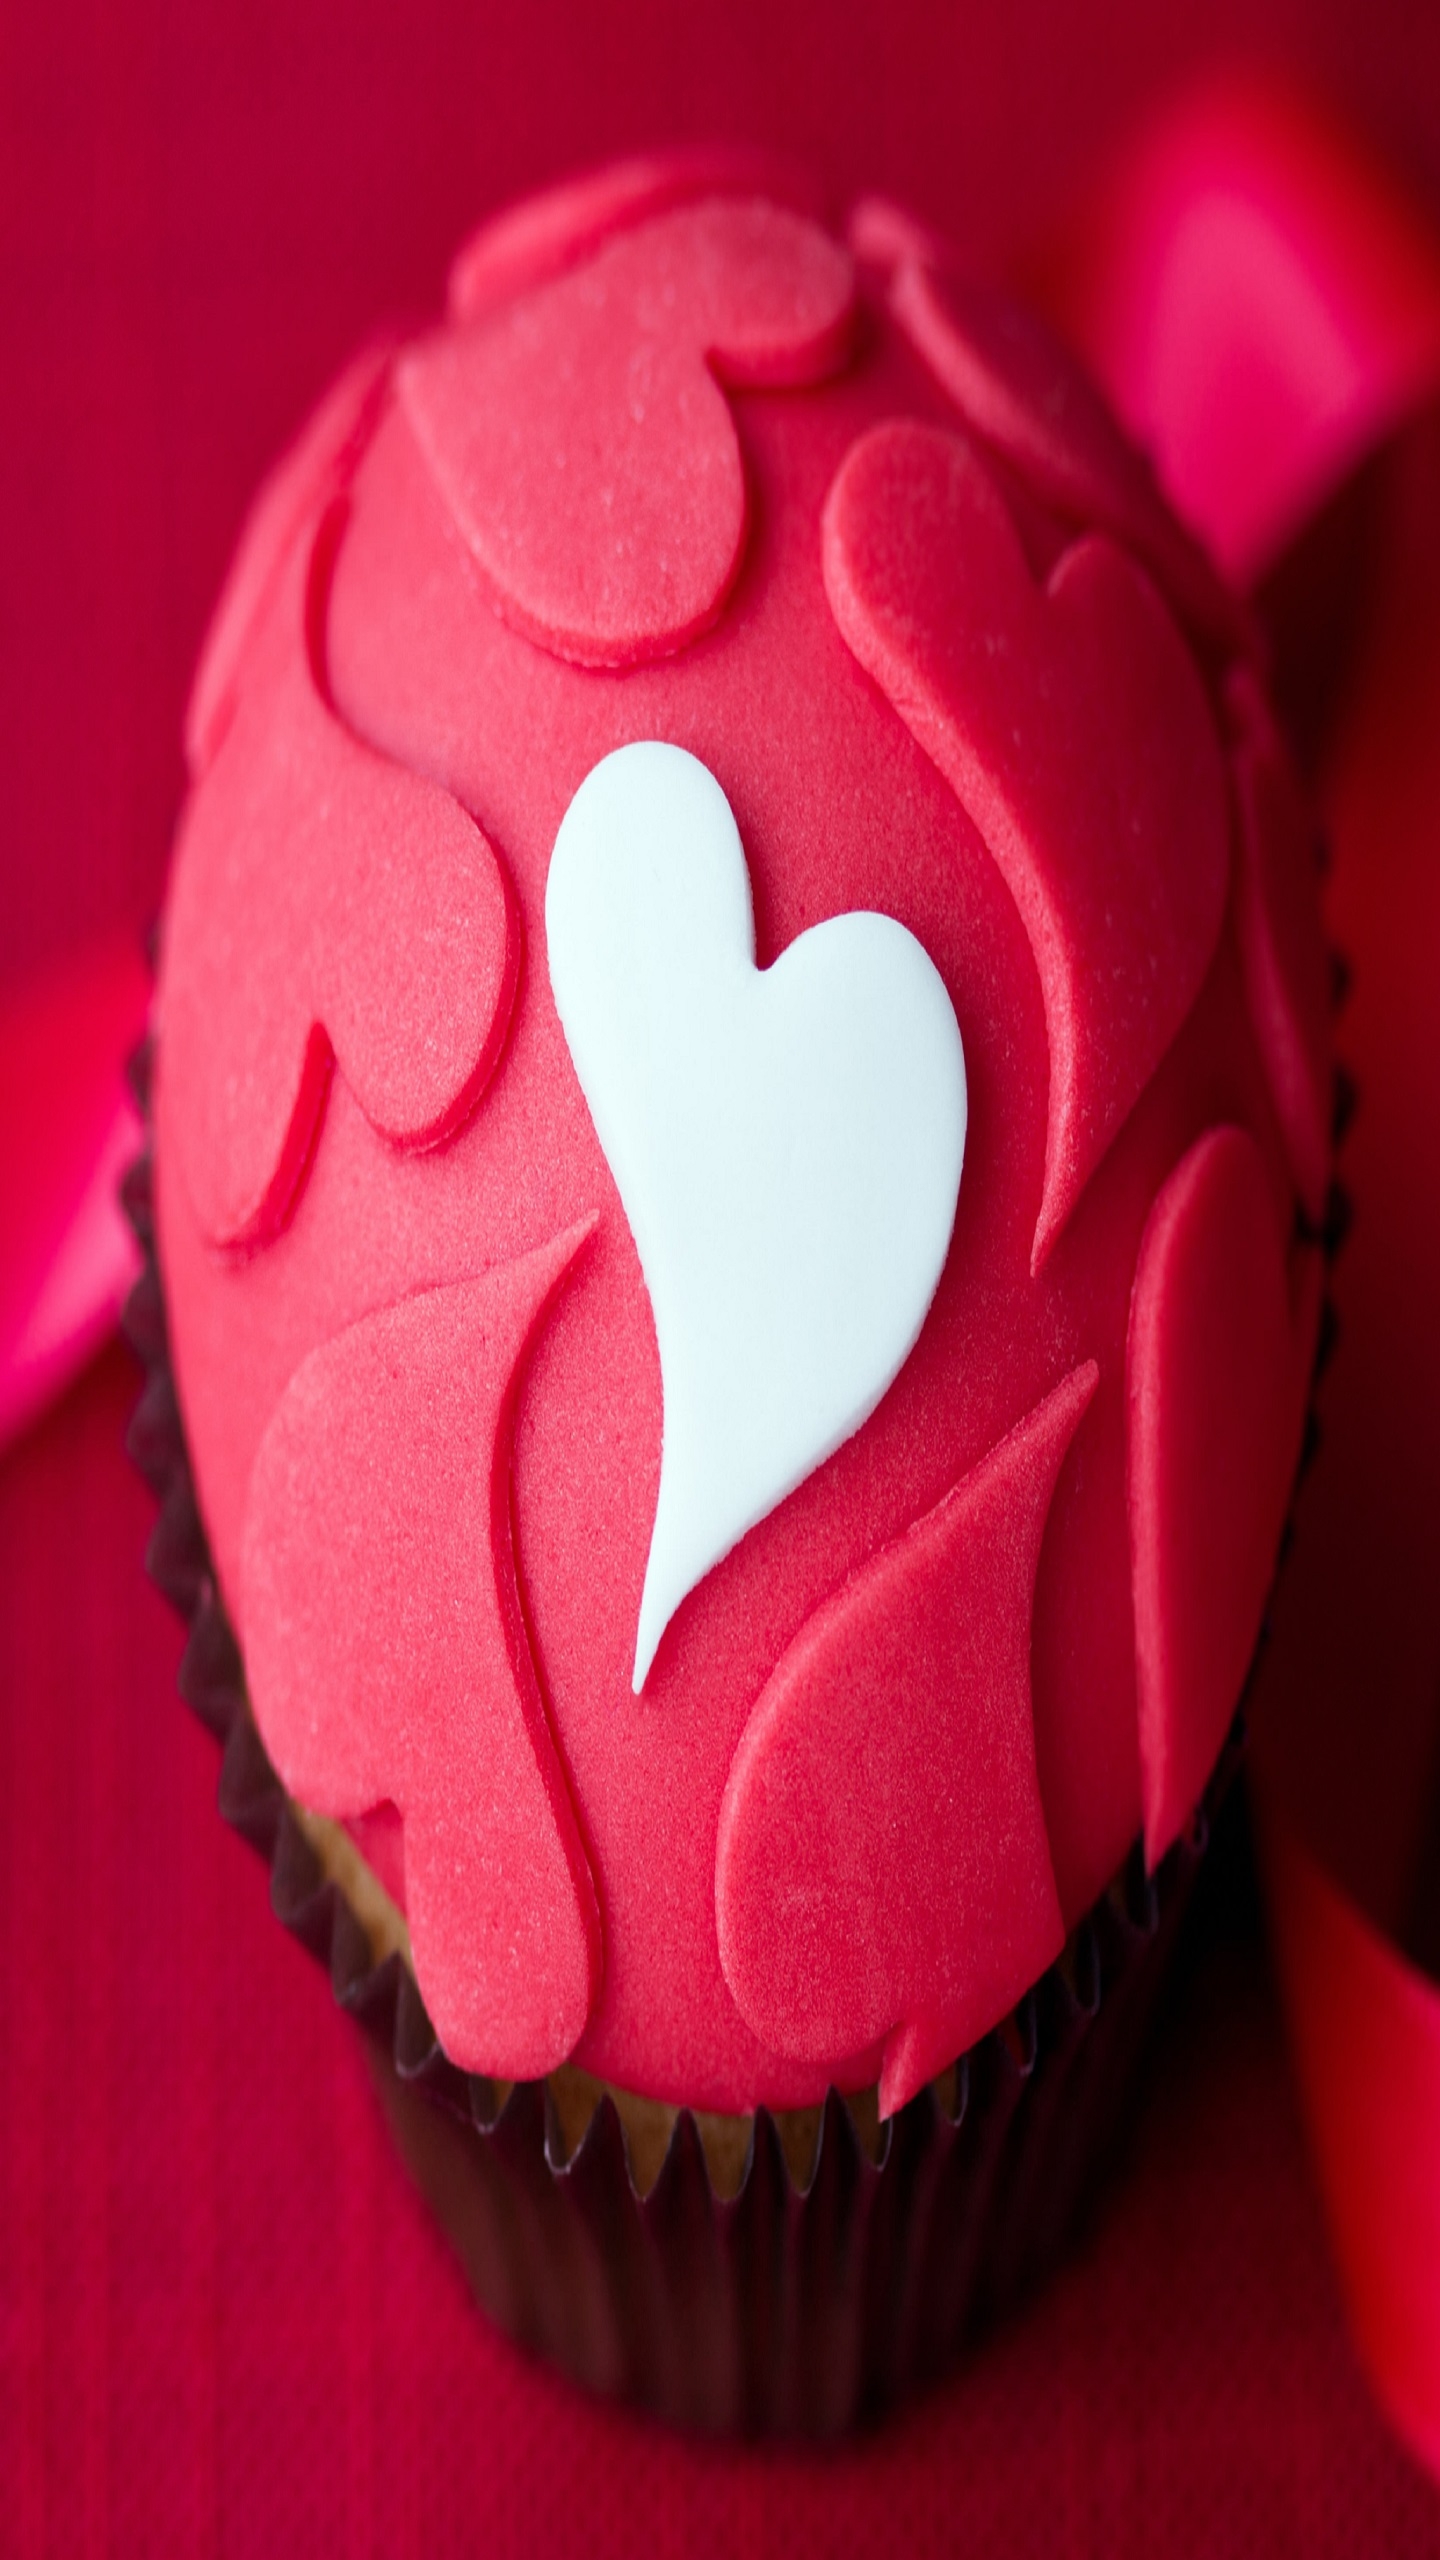 Love Cupcake for Samsung S7 & S7 Edge resolution